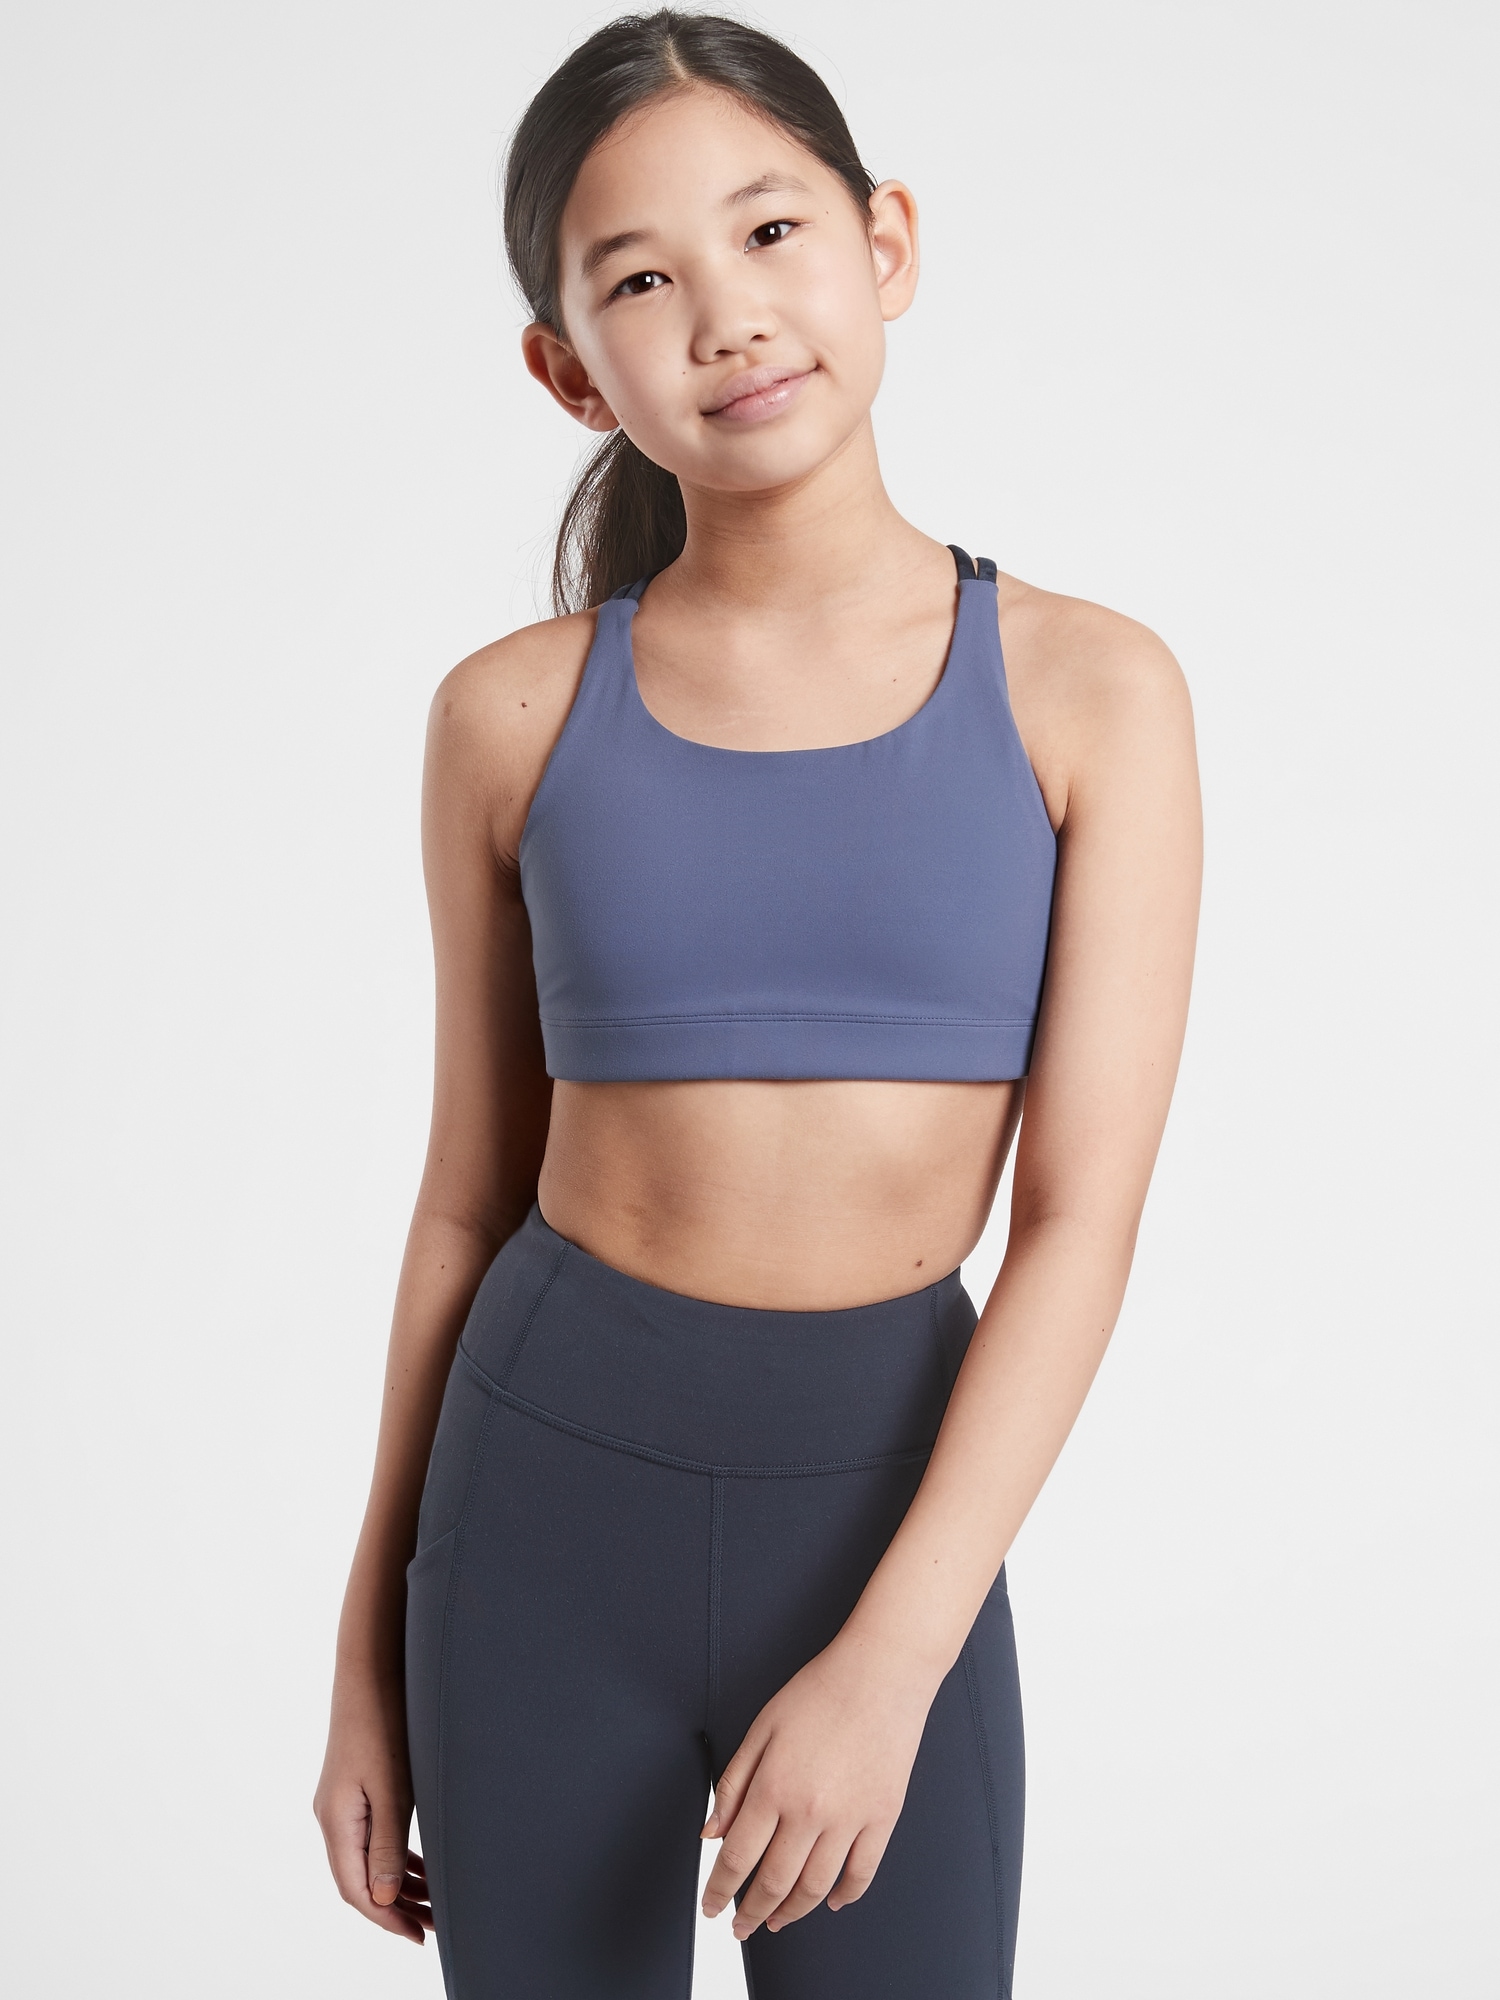 Athleta girl upbeat bra 2.0  Clothes design, Two piece skirt set, Outfit  inspo